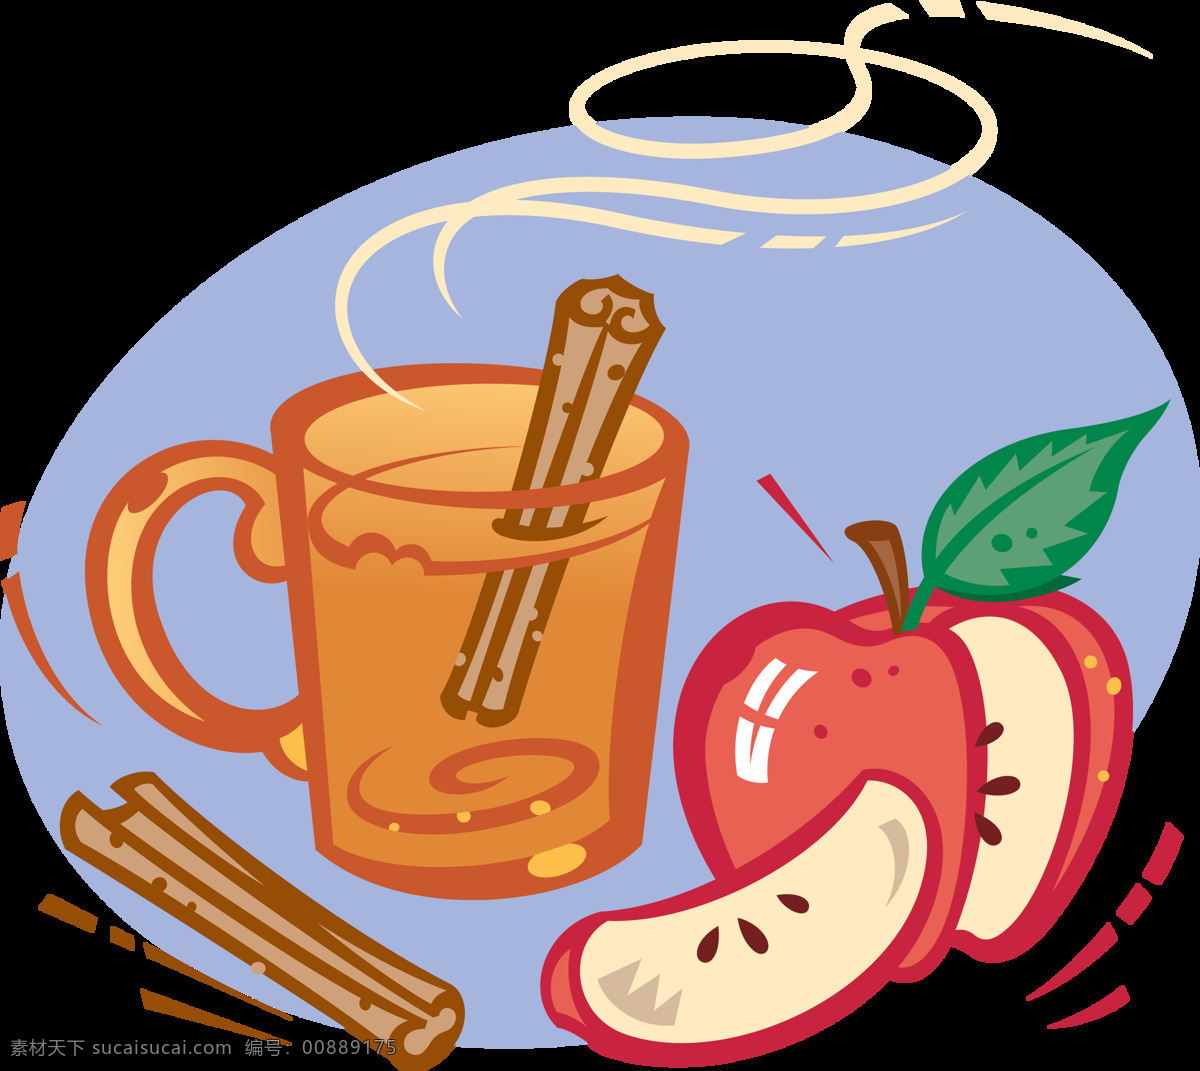 apple 杯子 创意水果 动漫动画 儿童画 高清 红苹果 黄苹果 简笔画 苹果设计素材 苹果模板下载 苹果 各种苹果 卡通画 卡通苹果 水果静物 水果 营养 美味 新鲜 新鲜水果 特写 生物世界 矢量图 日常生活